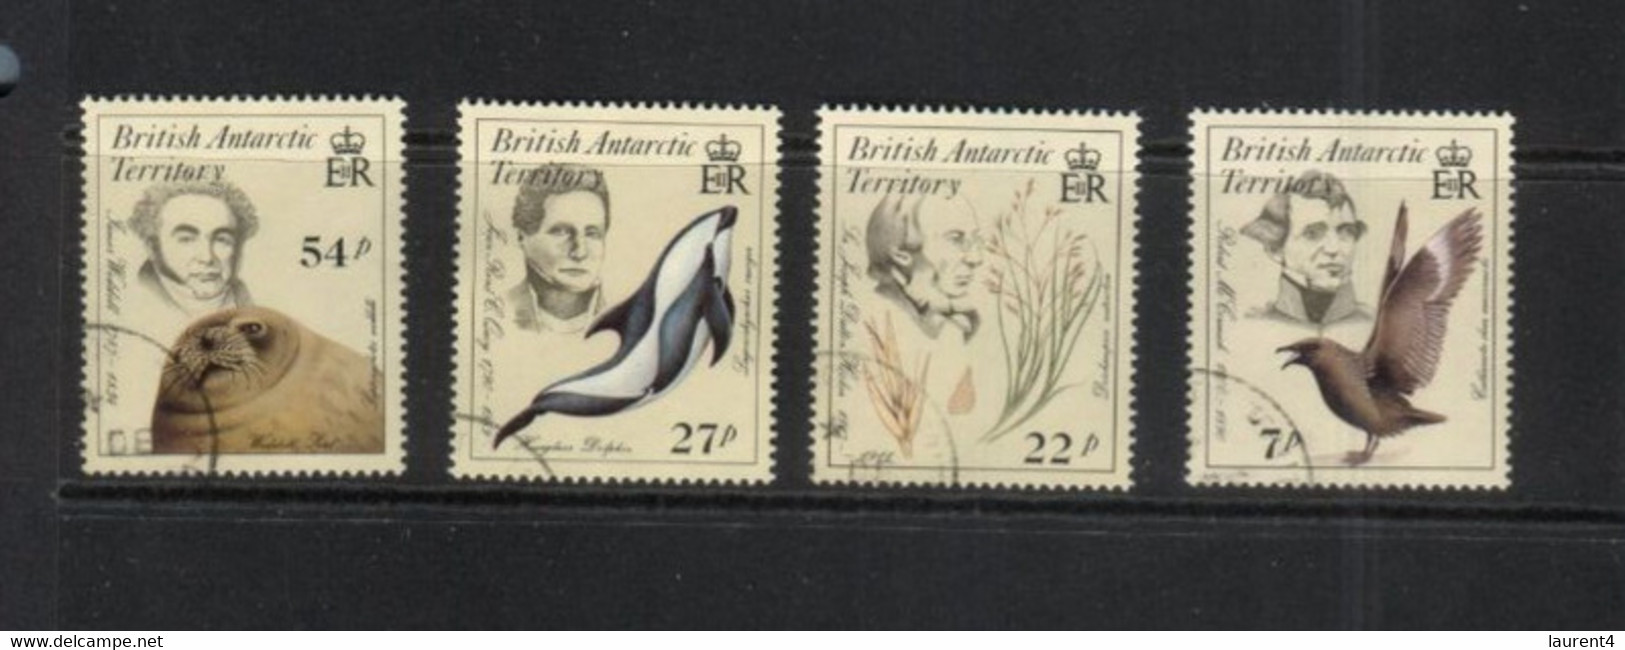 (8-10-2020) British Antarctic Territory - 4 Used Stamps  (Explorer) - Used Stamps